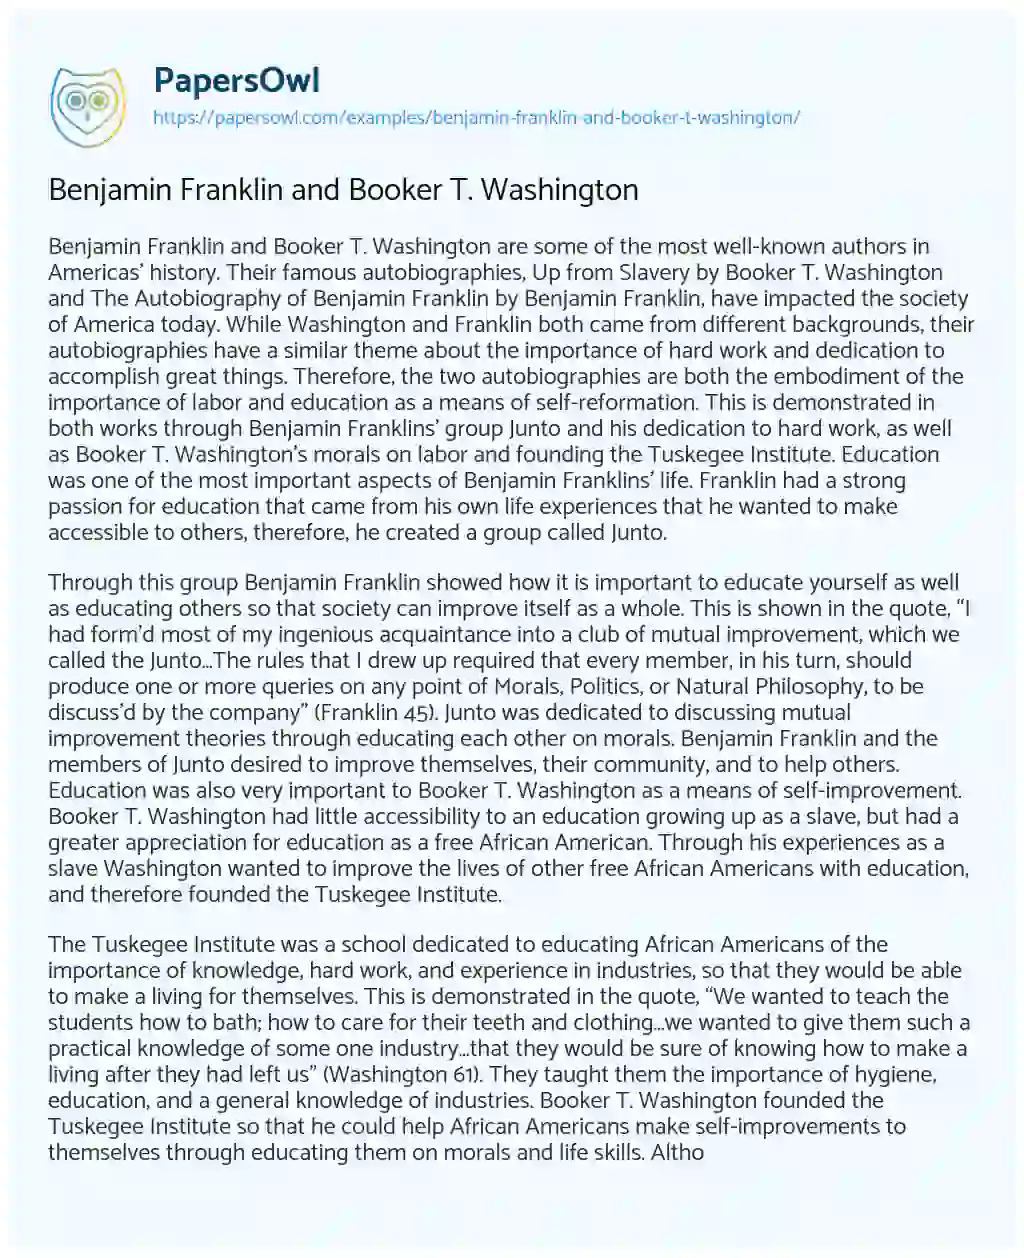 Benjamin Franklin and Booker T. Washington essay